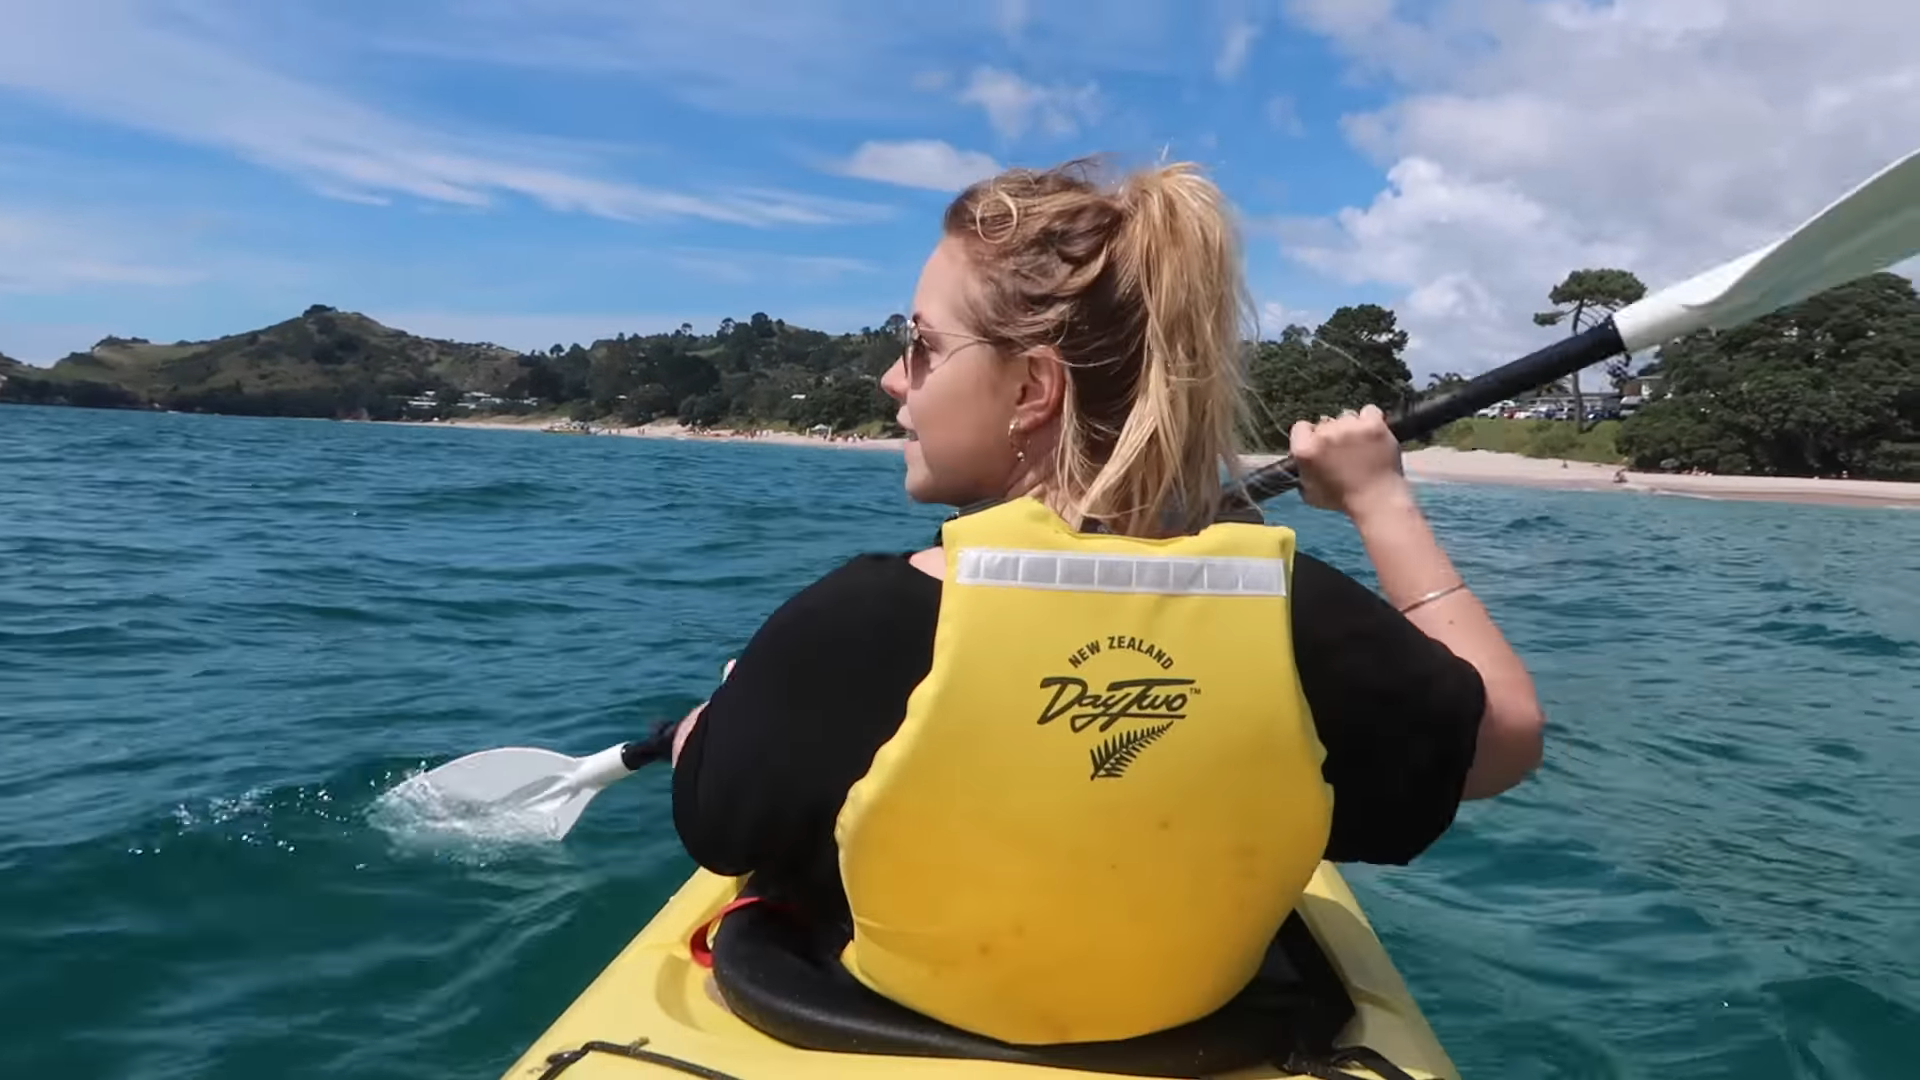 Amazing Kayaking Trip to New Zealand